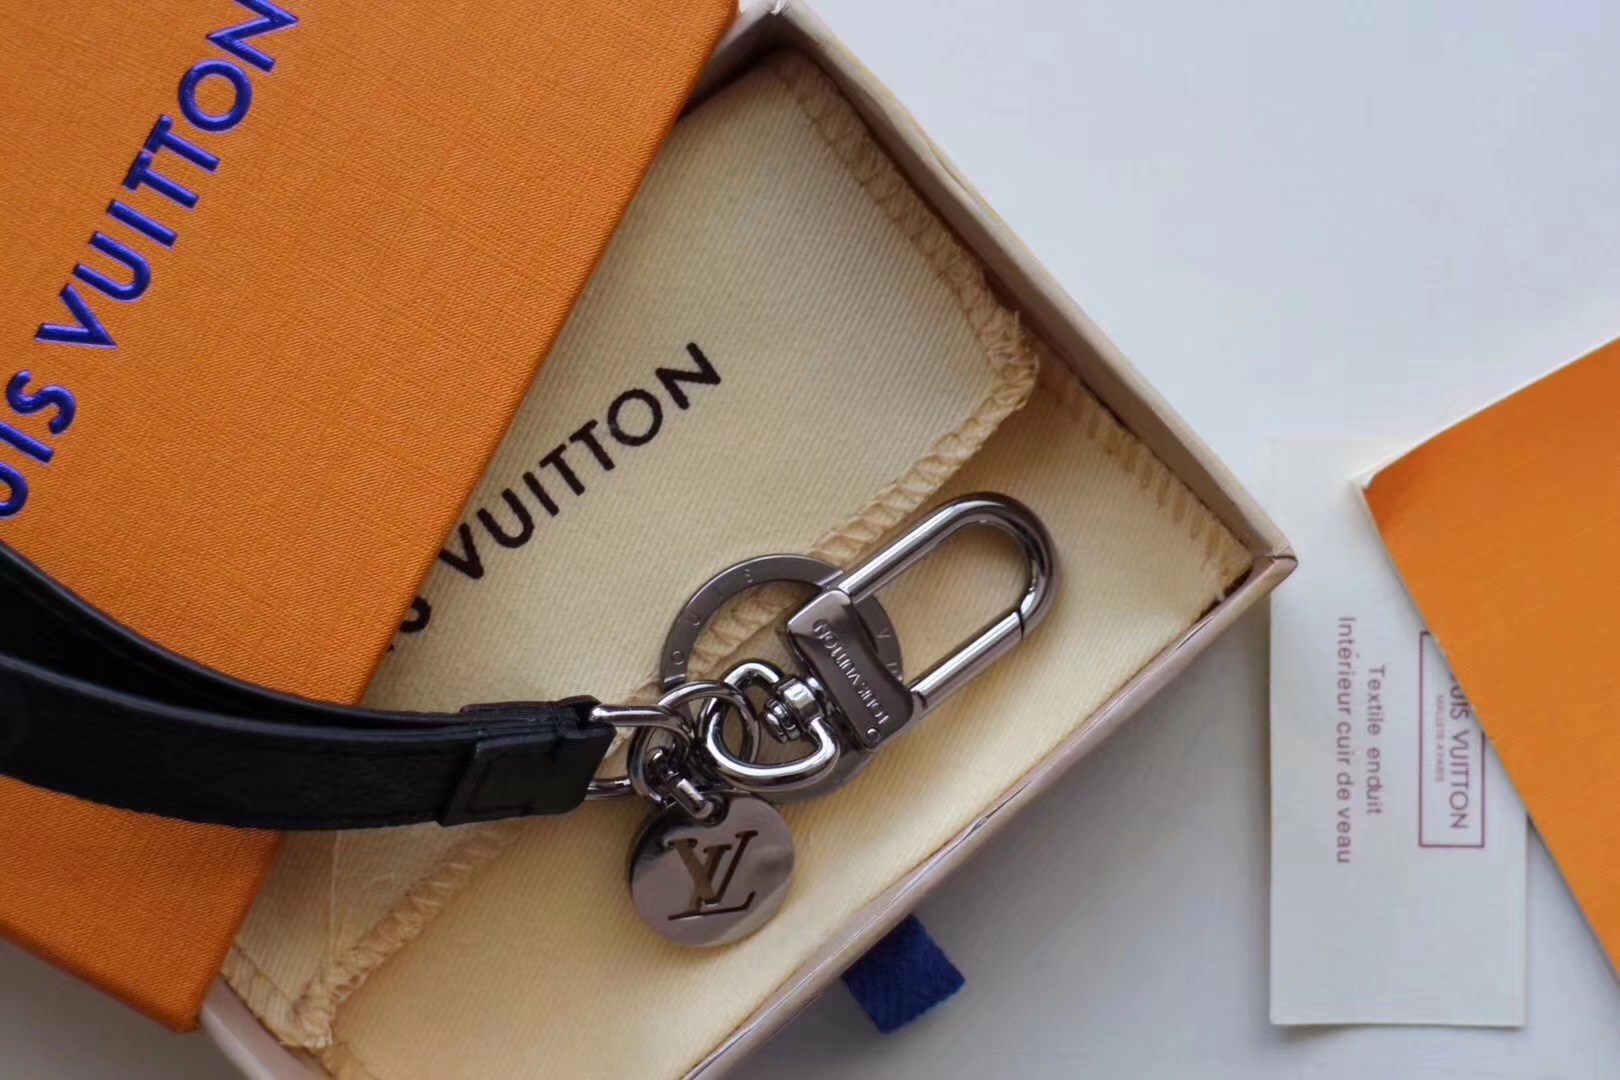 Louis Vuitton Dragonne Bag Charm & Key Holder (BIJOU DE SAC ET PORTE-CLES  DRAGONNE, M61950, MONOGRAM ECLIPSE WRIST STRAP, BAG CHARM AND KEY RING)